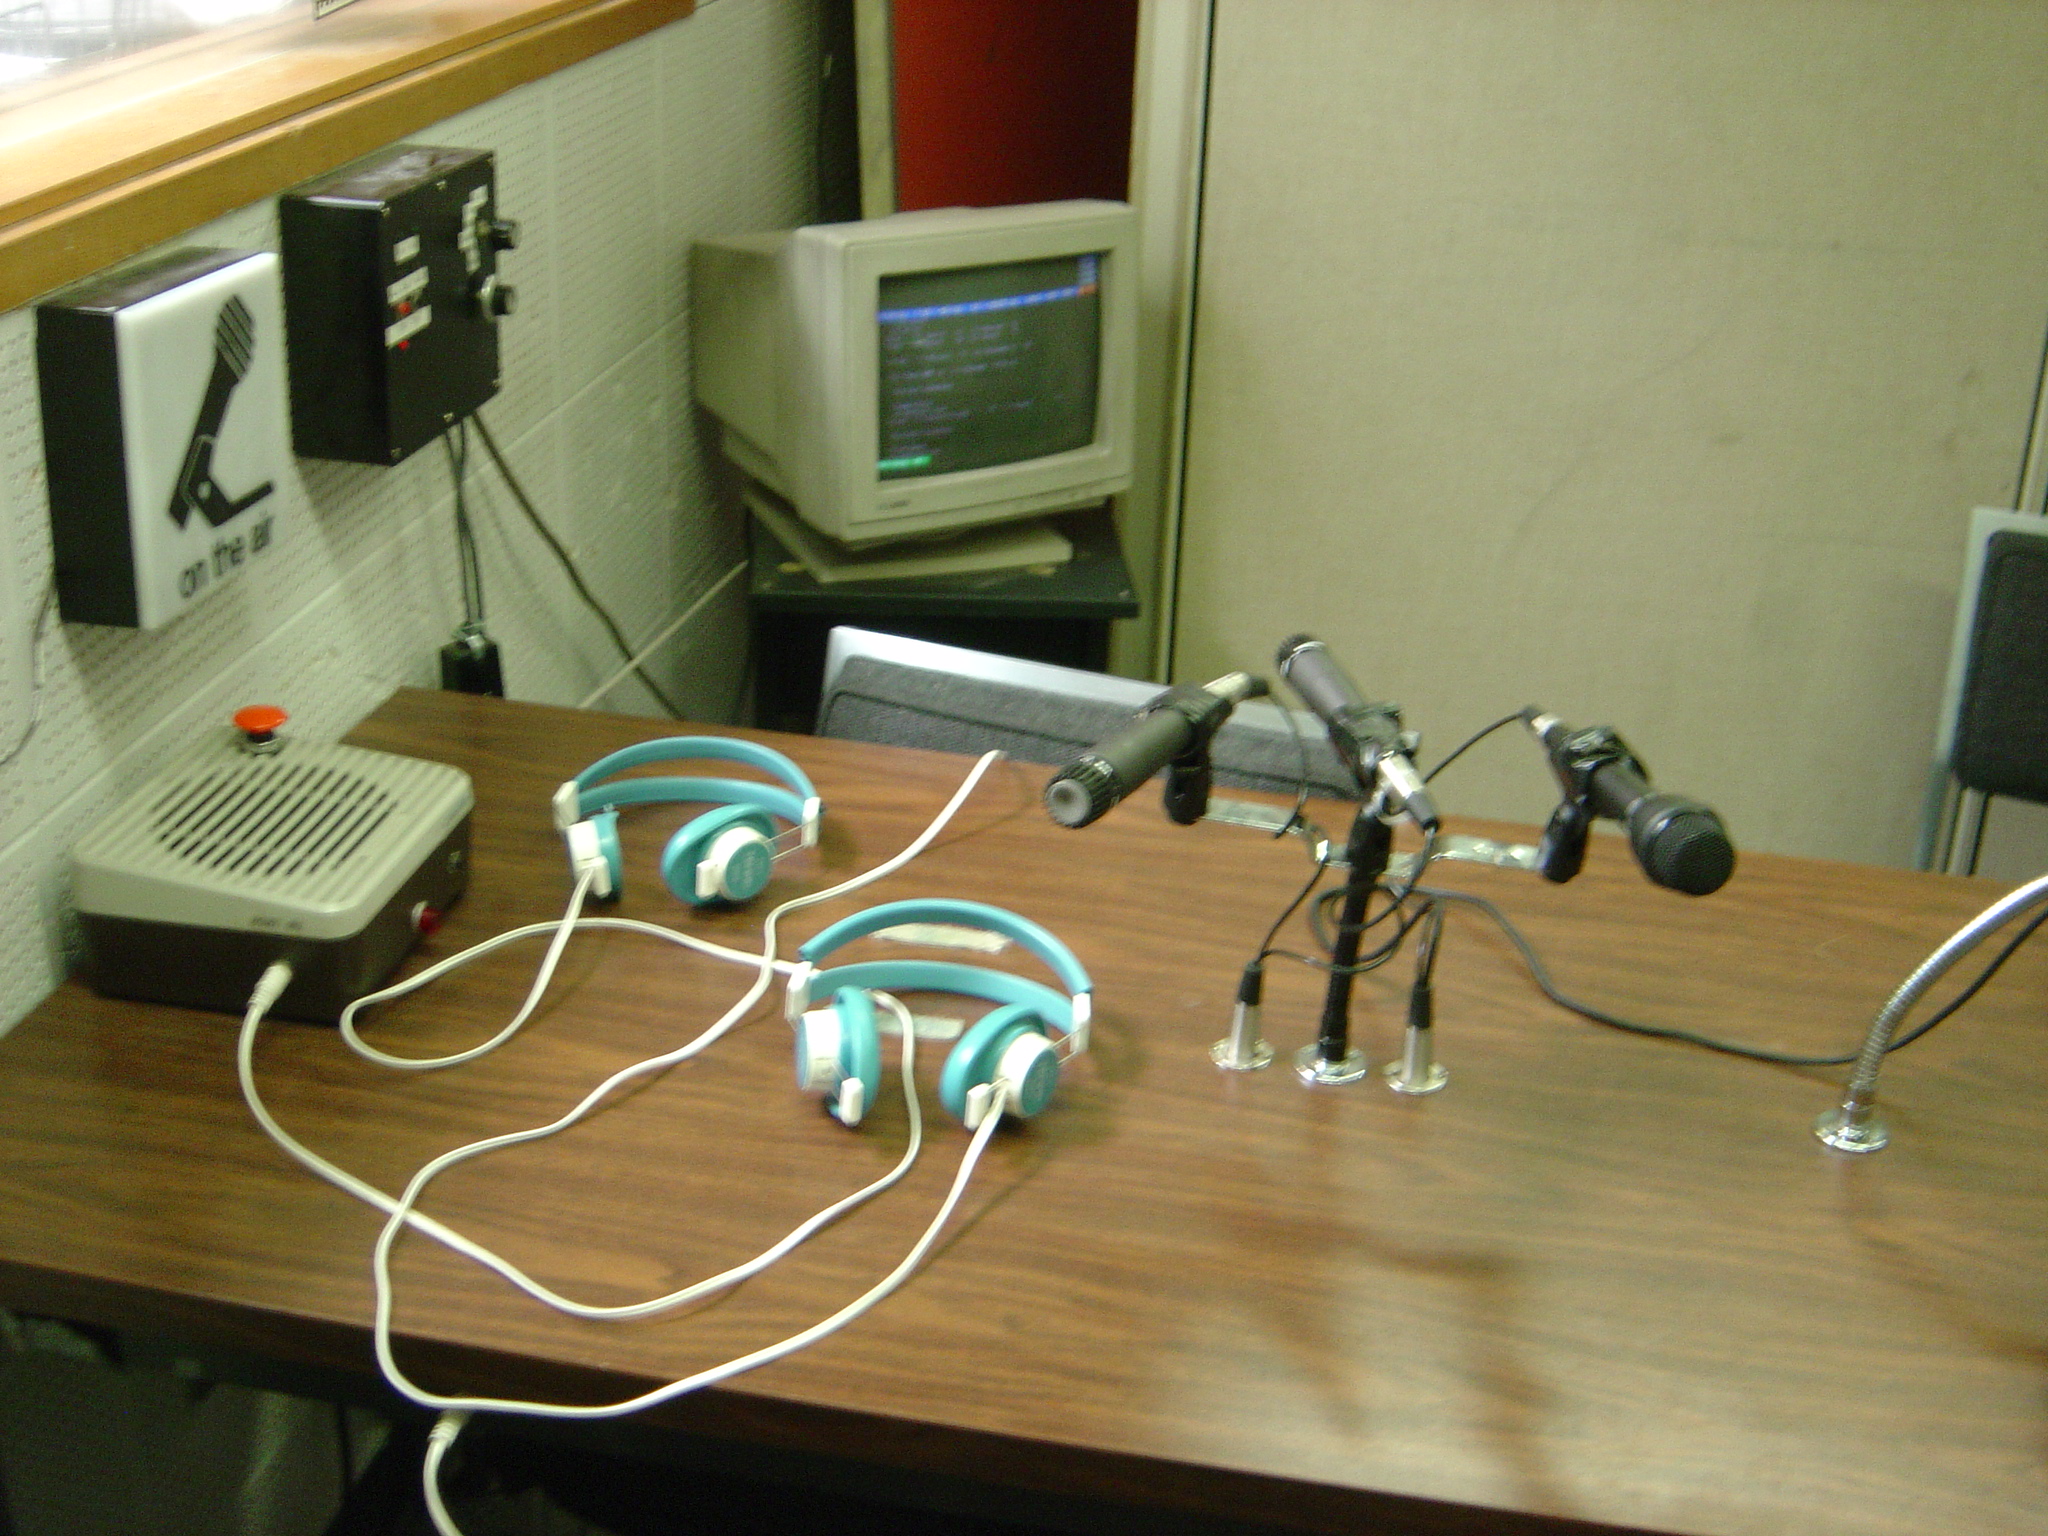 2004 - Studio B with the sturdy blue headphones.